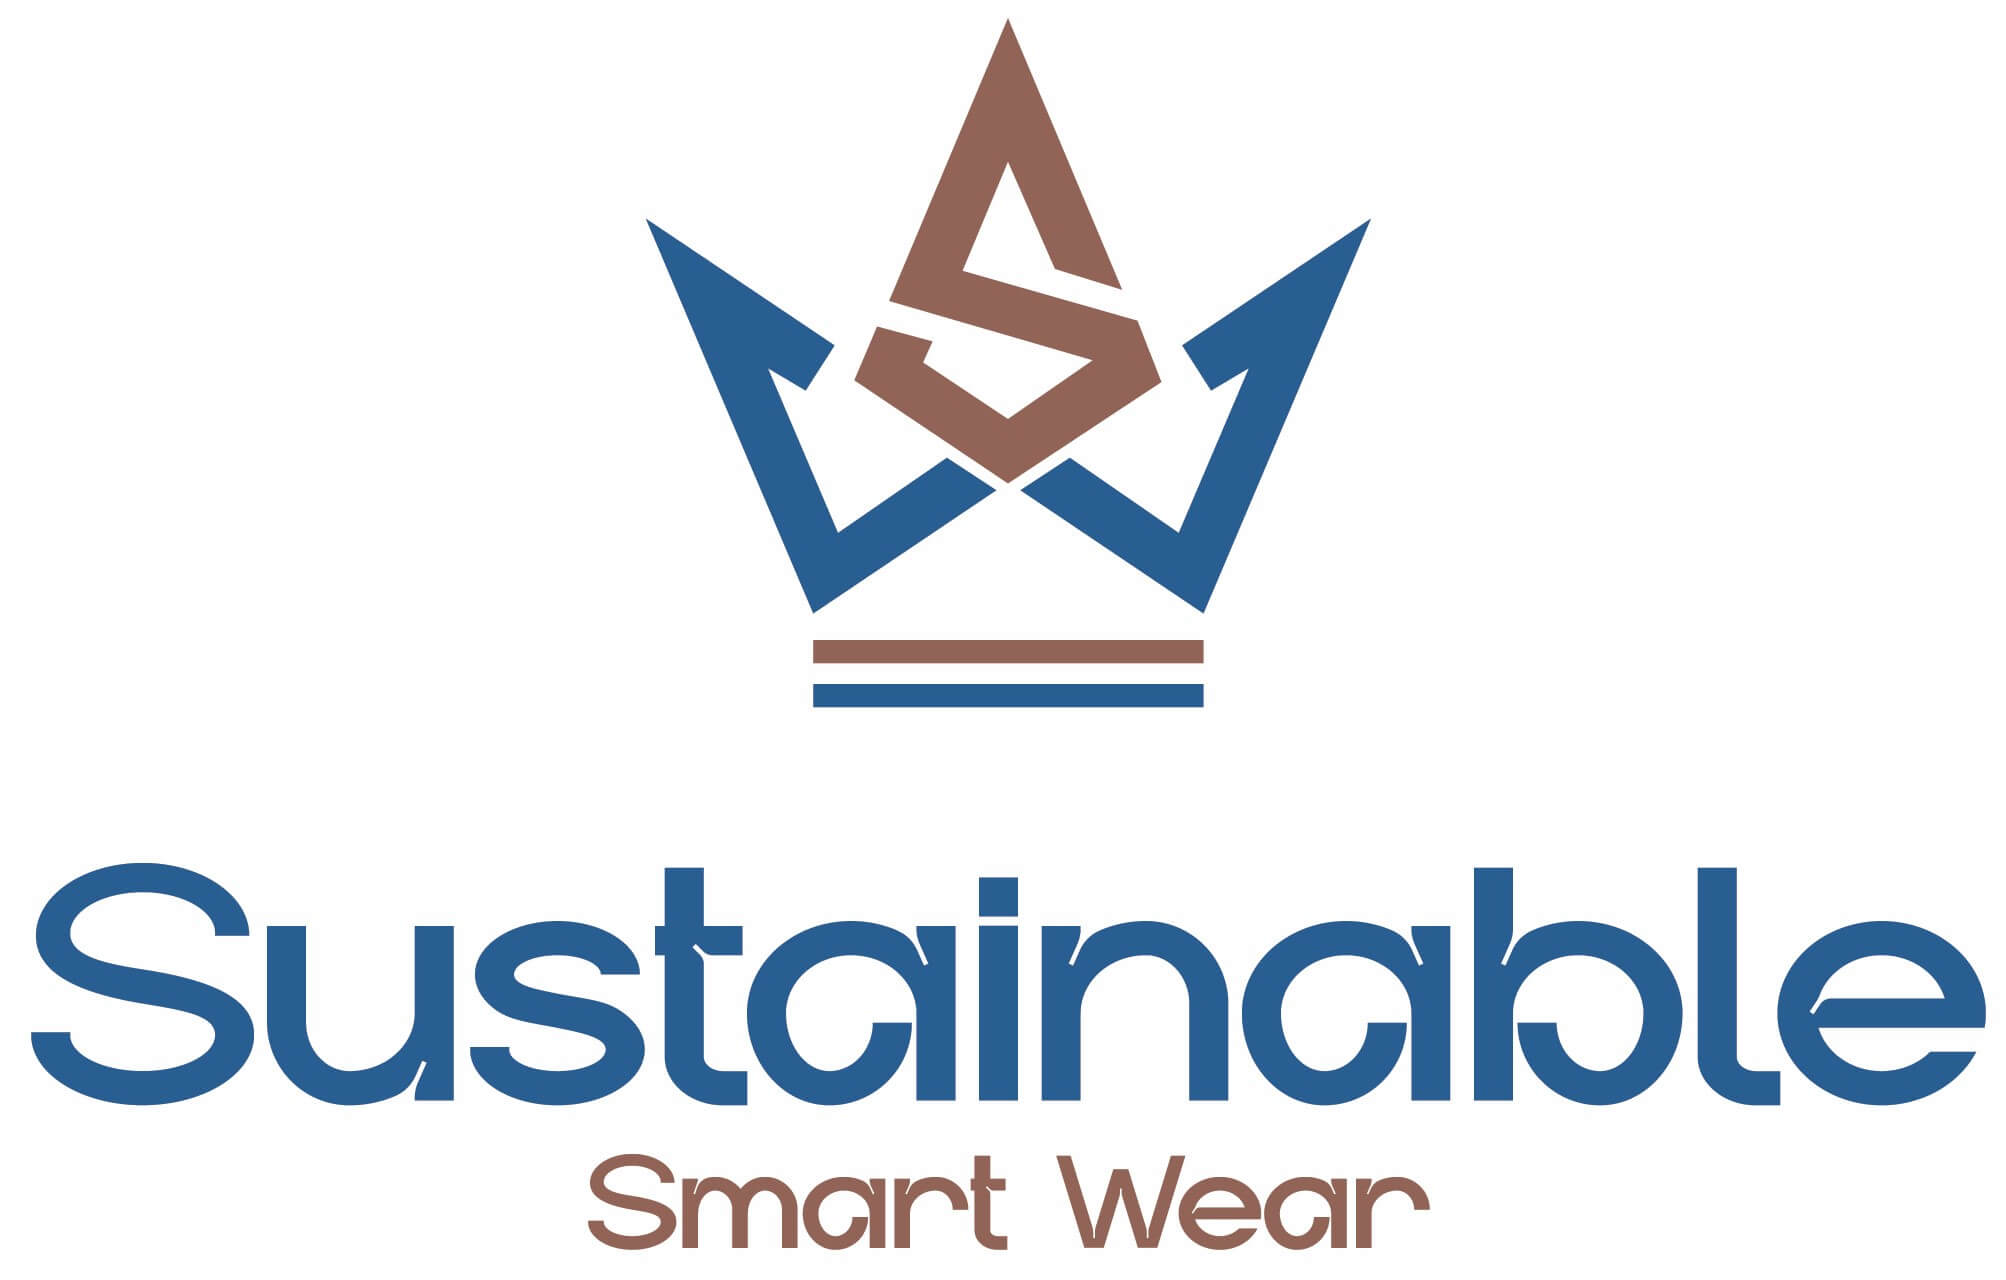 Sustainable Smartwear